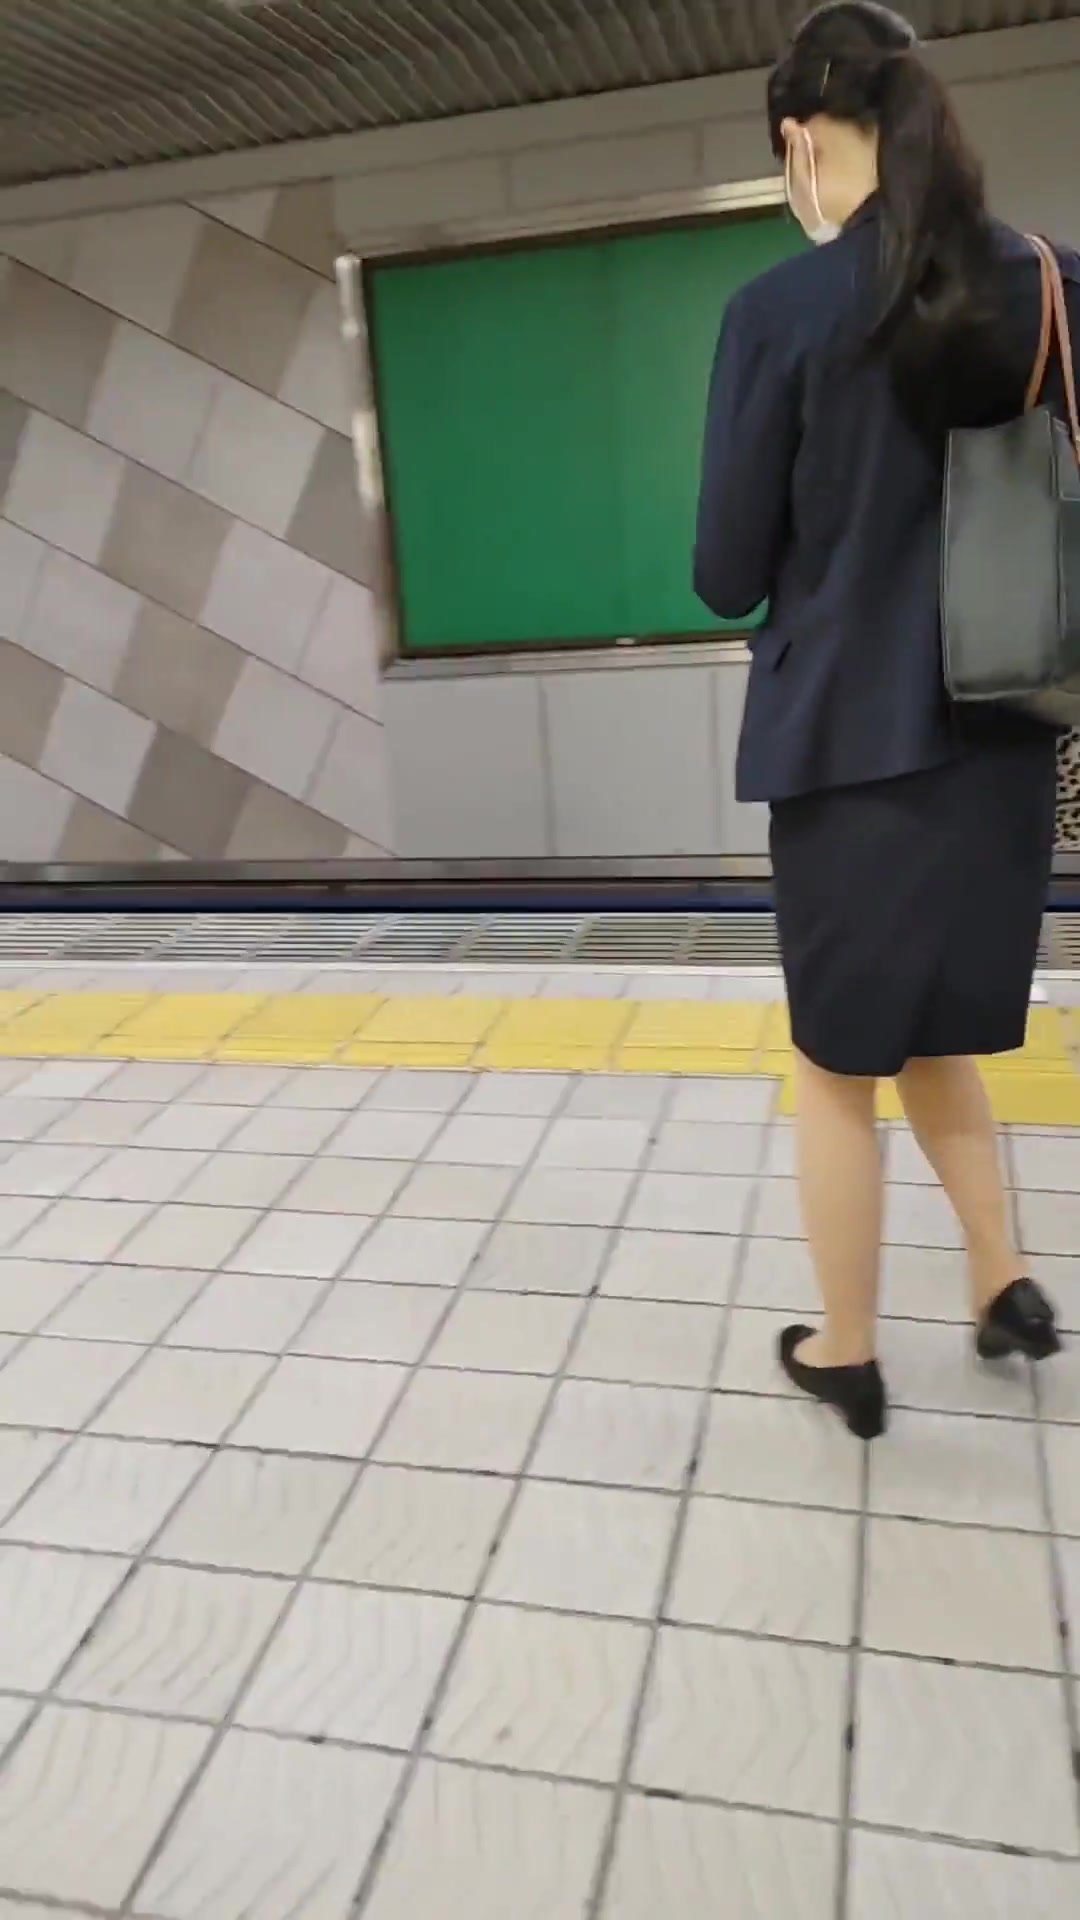 Japanese Office Ladies Upskirt - video 4